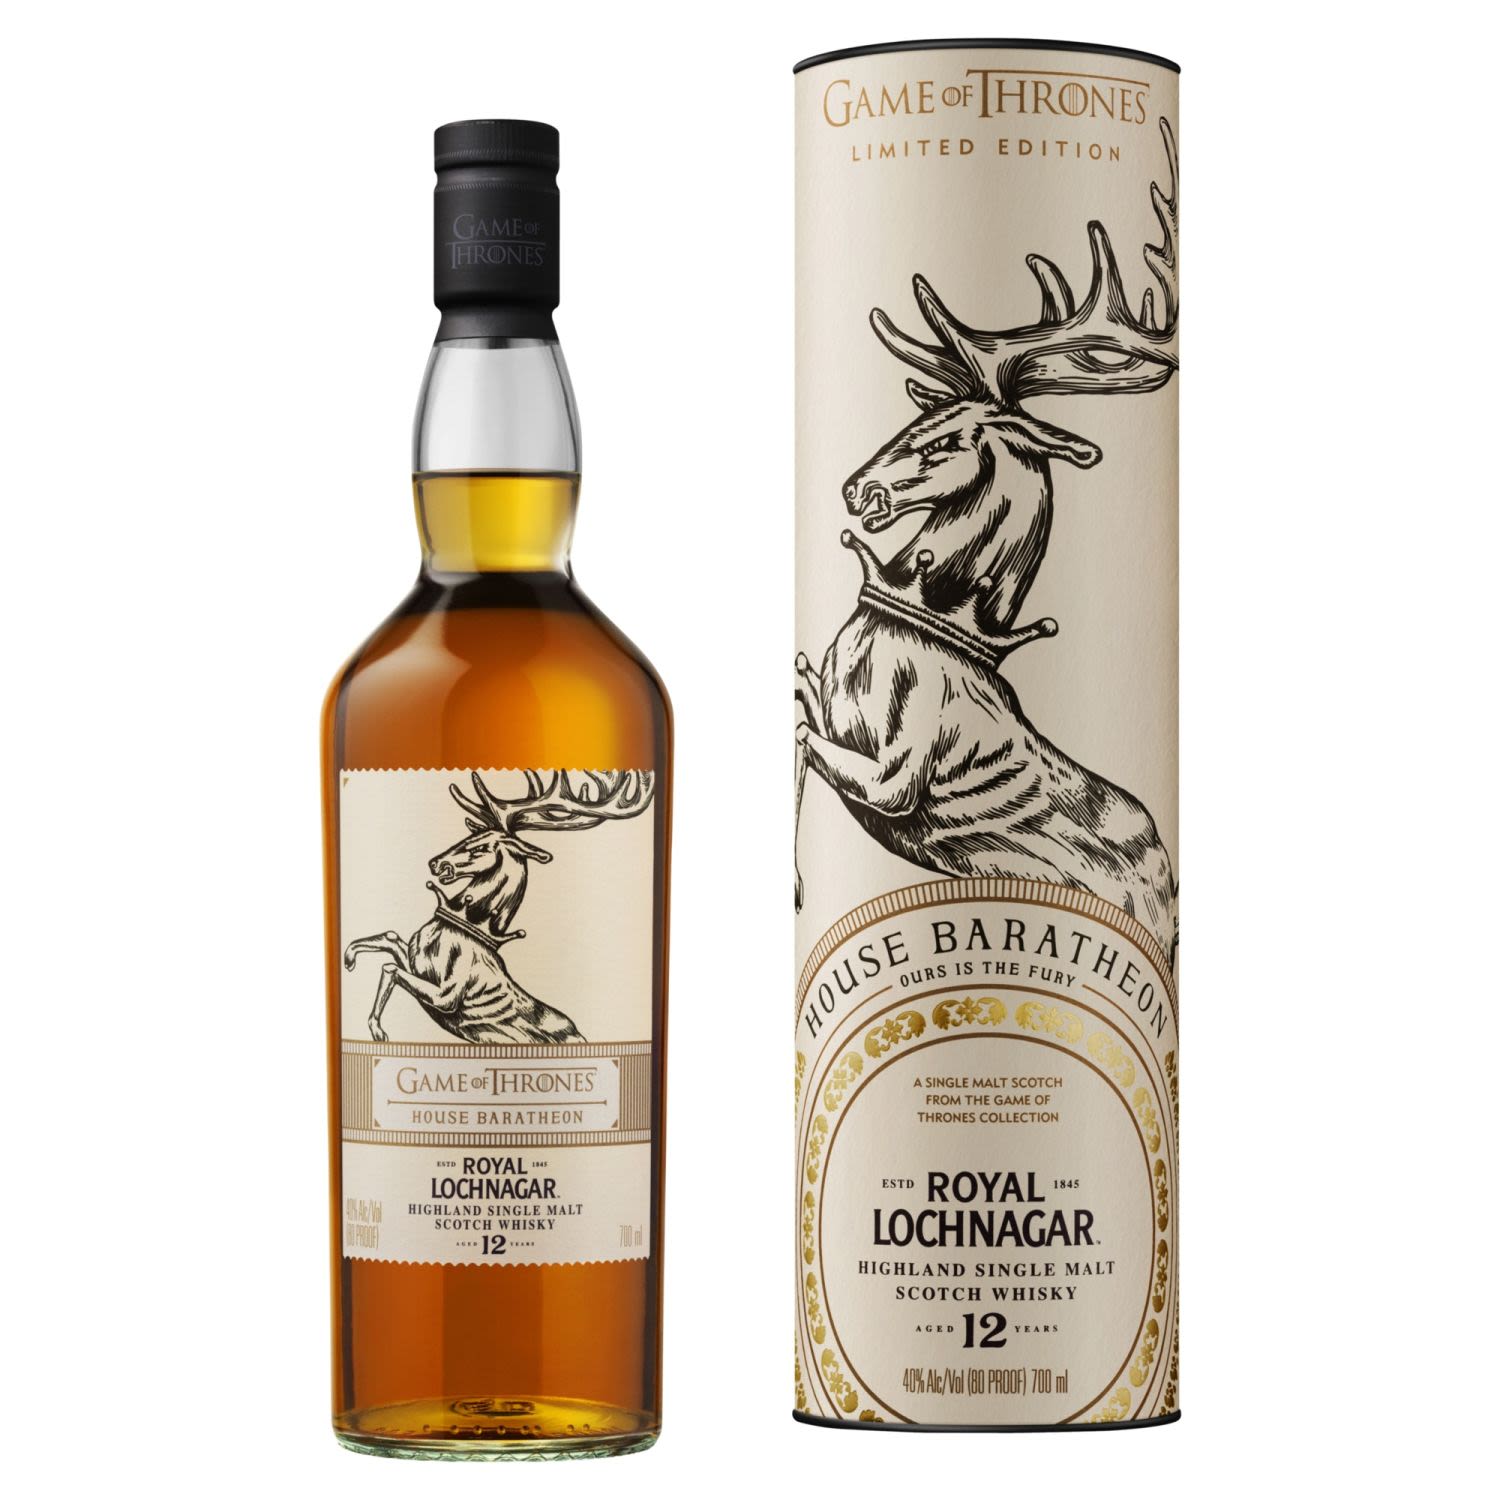 Game of Thrones House Baratheon Royal Lochnagar 12 Year Old Single Malt Scotch Whisky 700mL Bottle